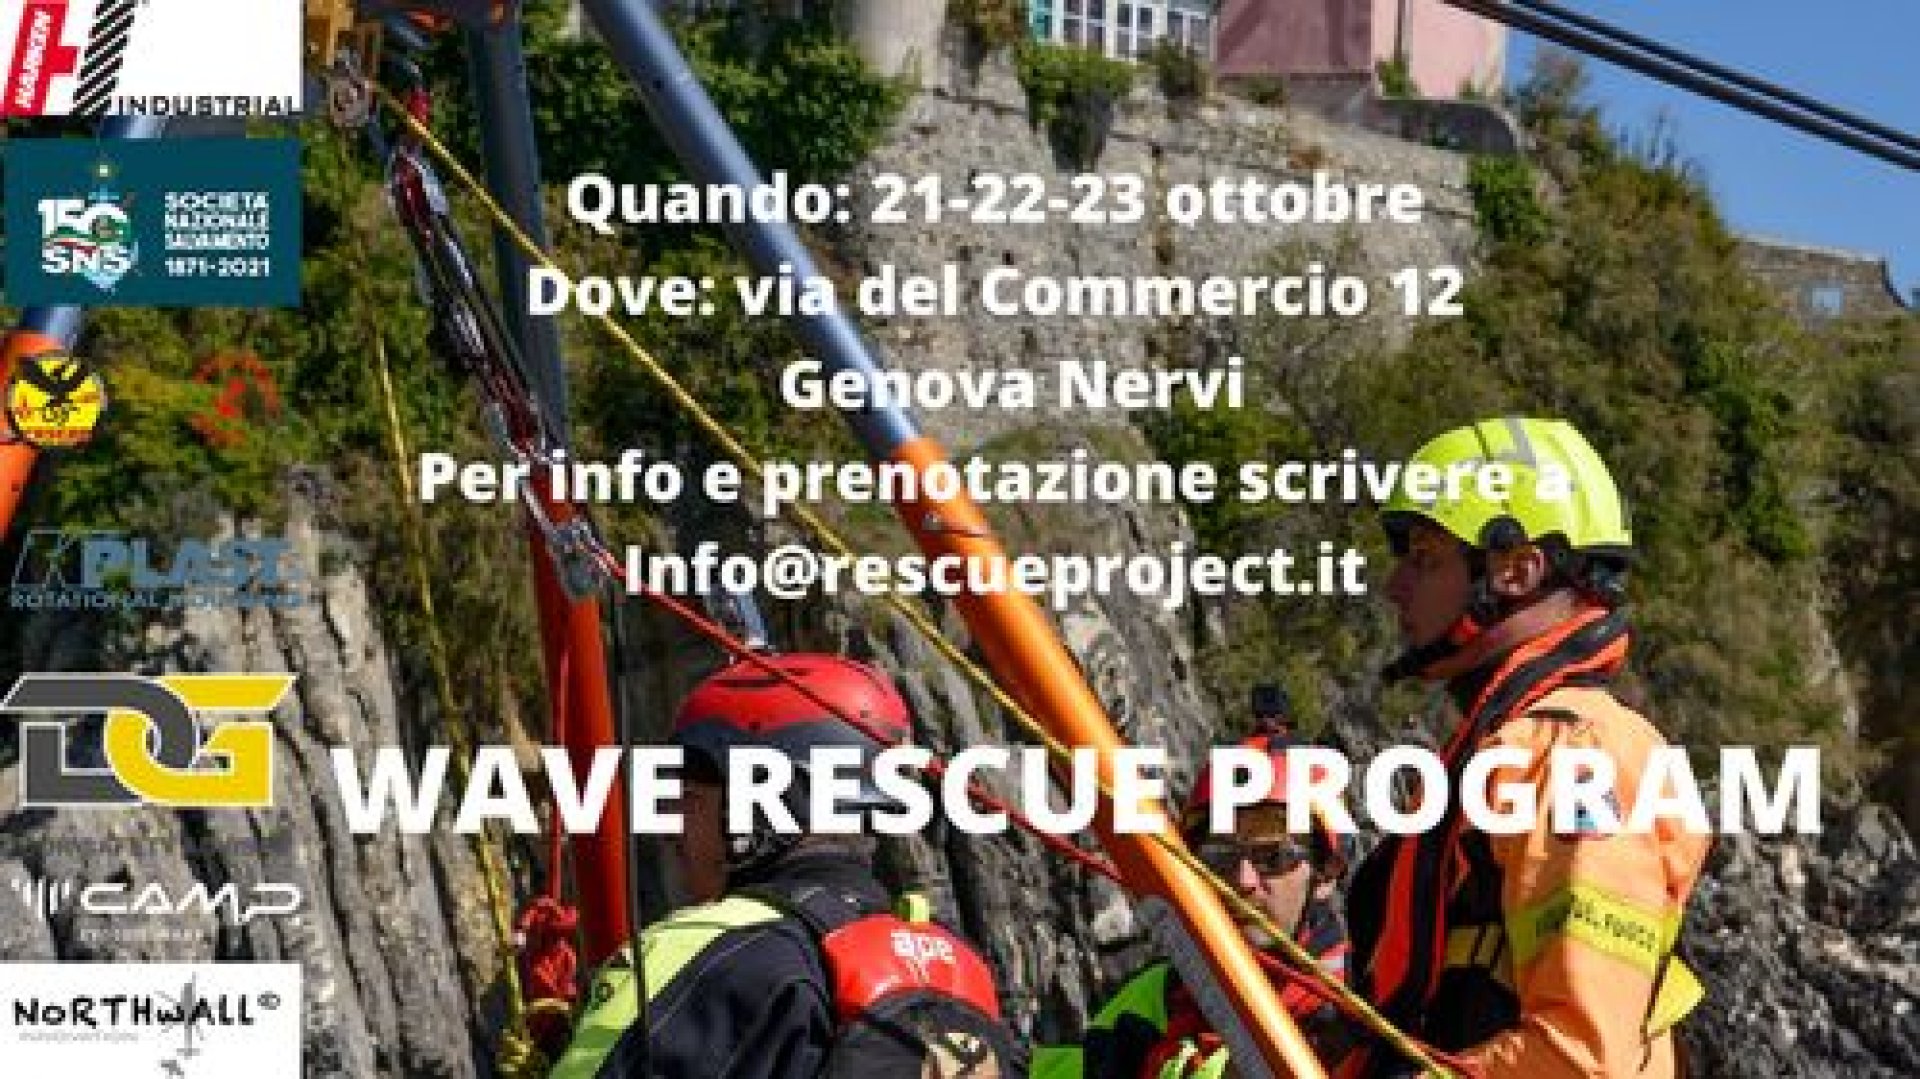 Rescue WAVE Program